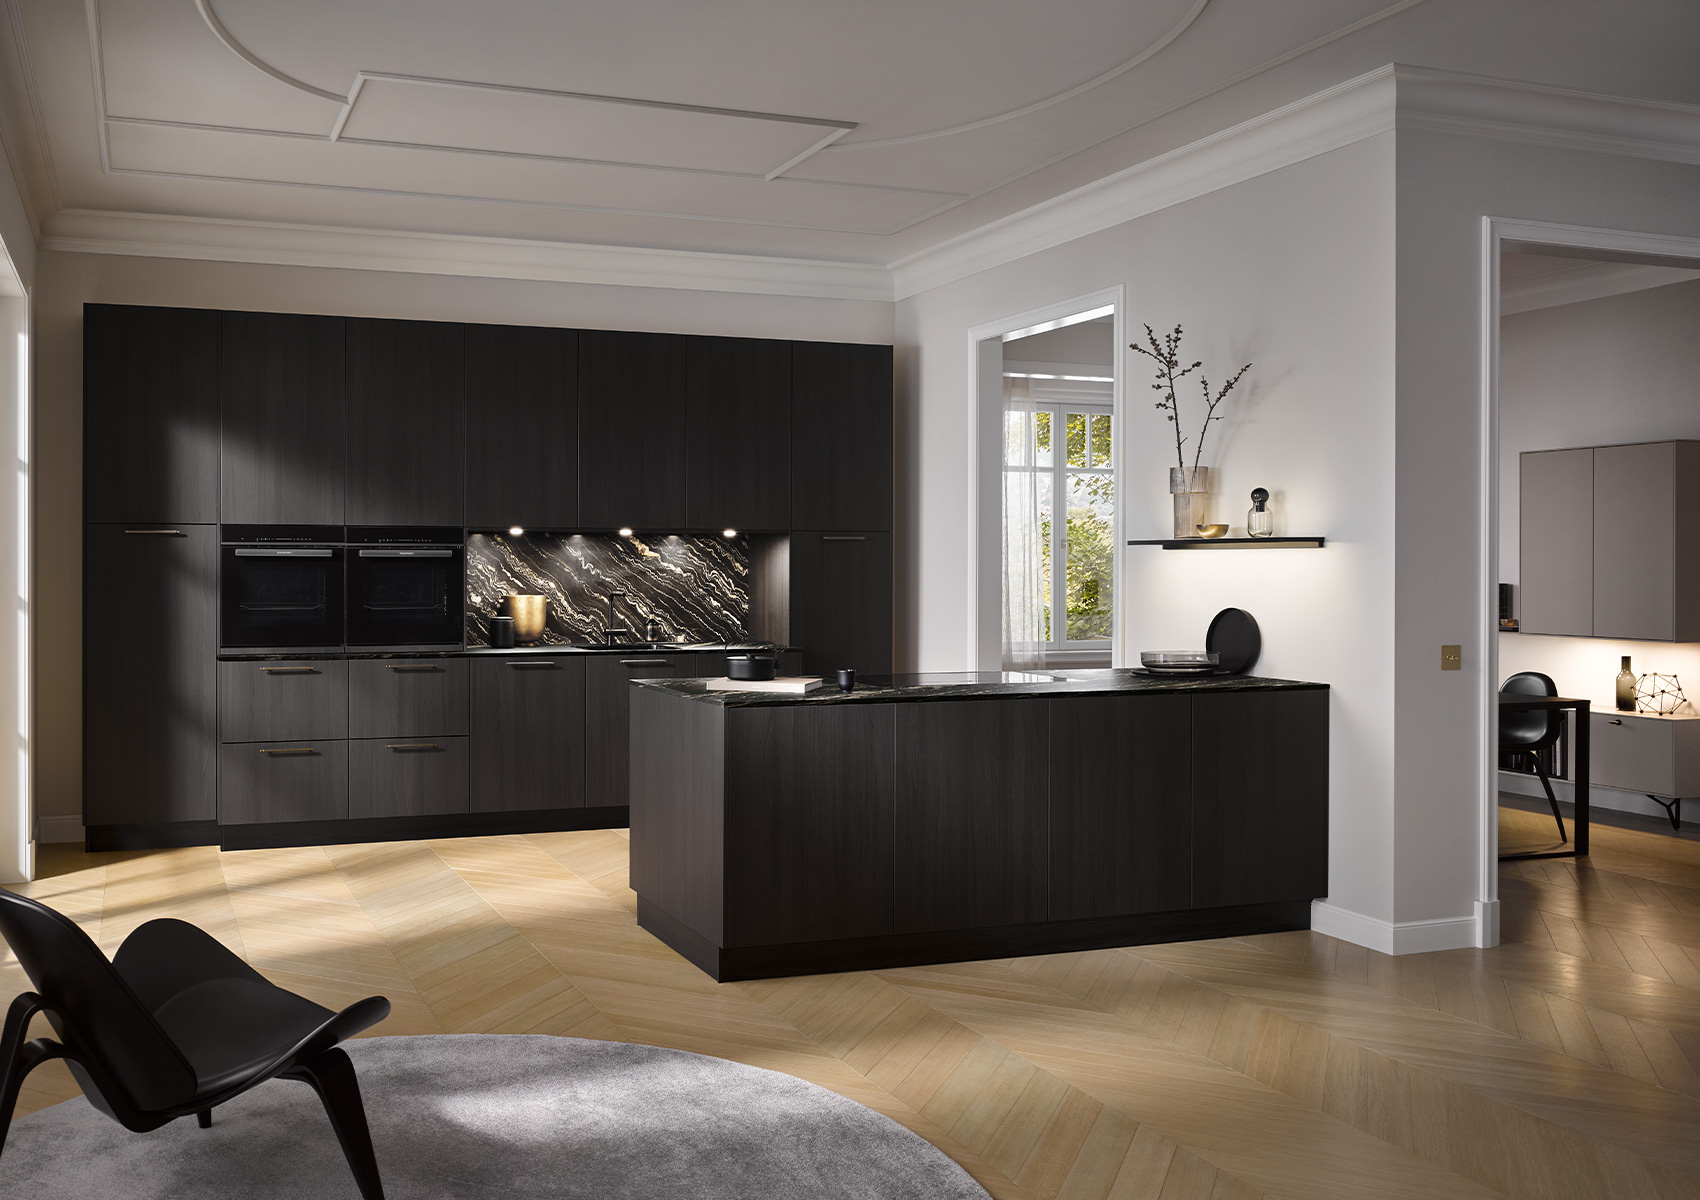 Black kitchen with elegant lighting elements